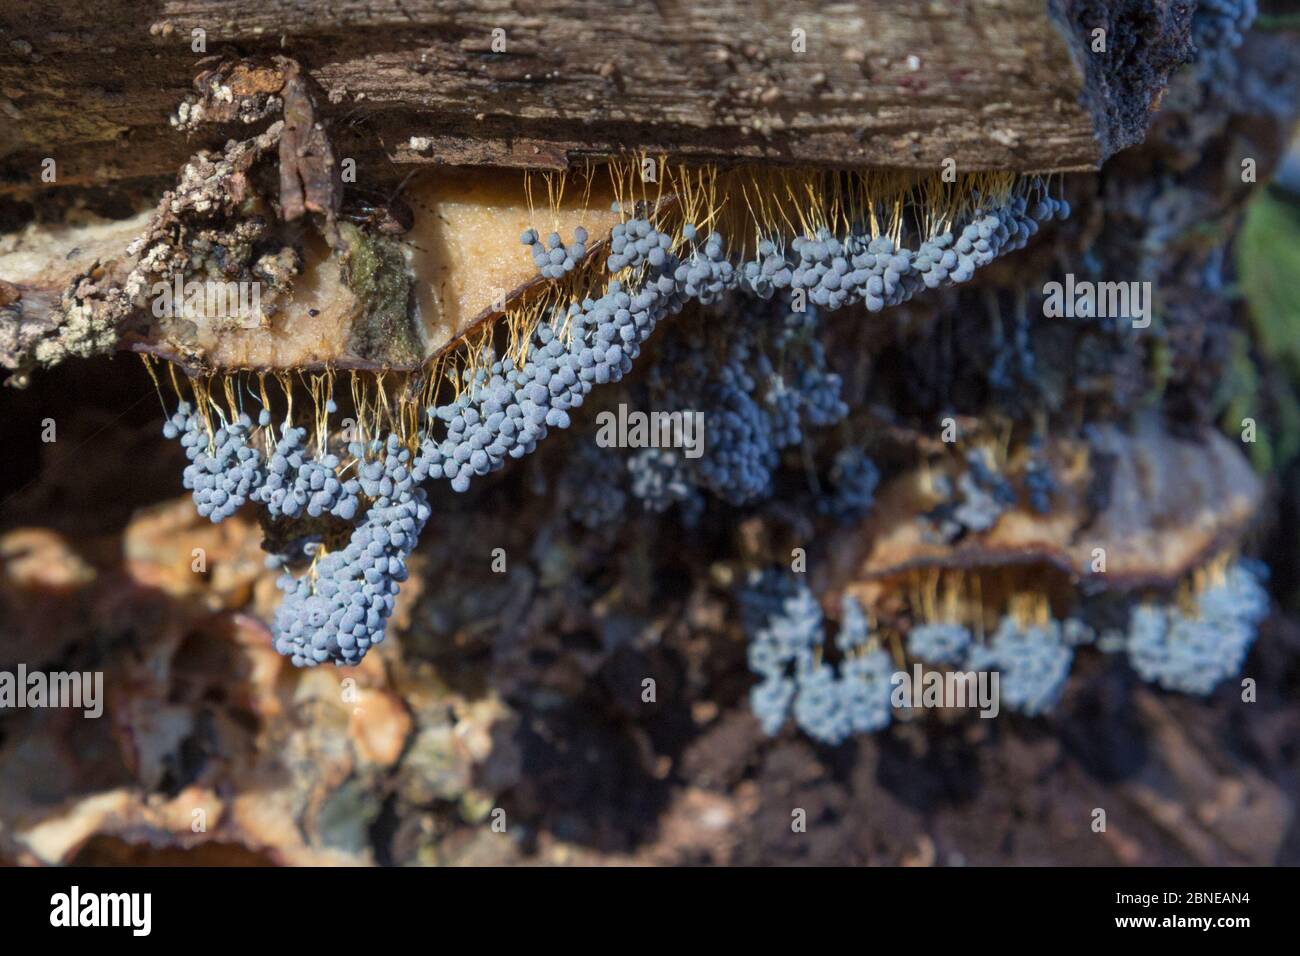 Slime mould (Badhamia utricularis) growing on decaying tree stump. Plitvice Lakes National Park, Croatia. November. Stock Photo